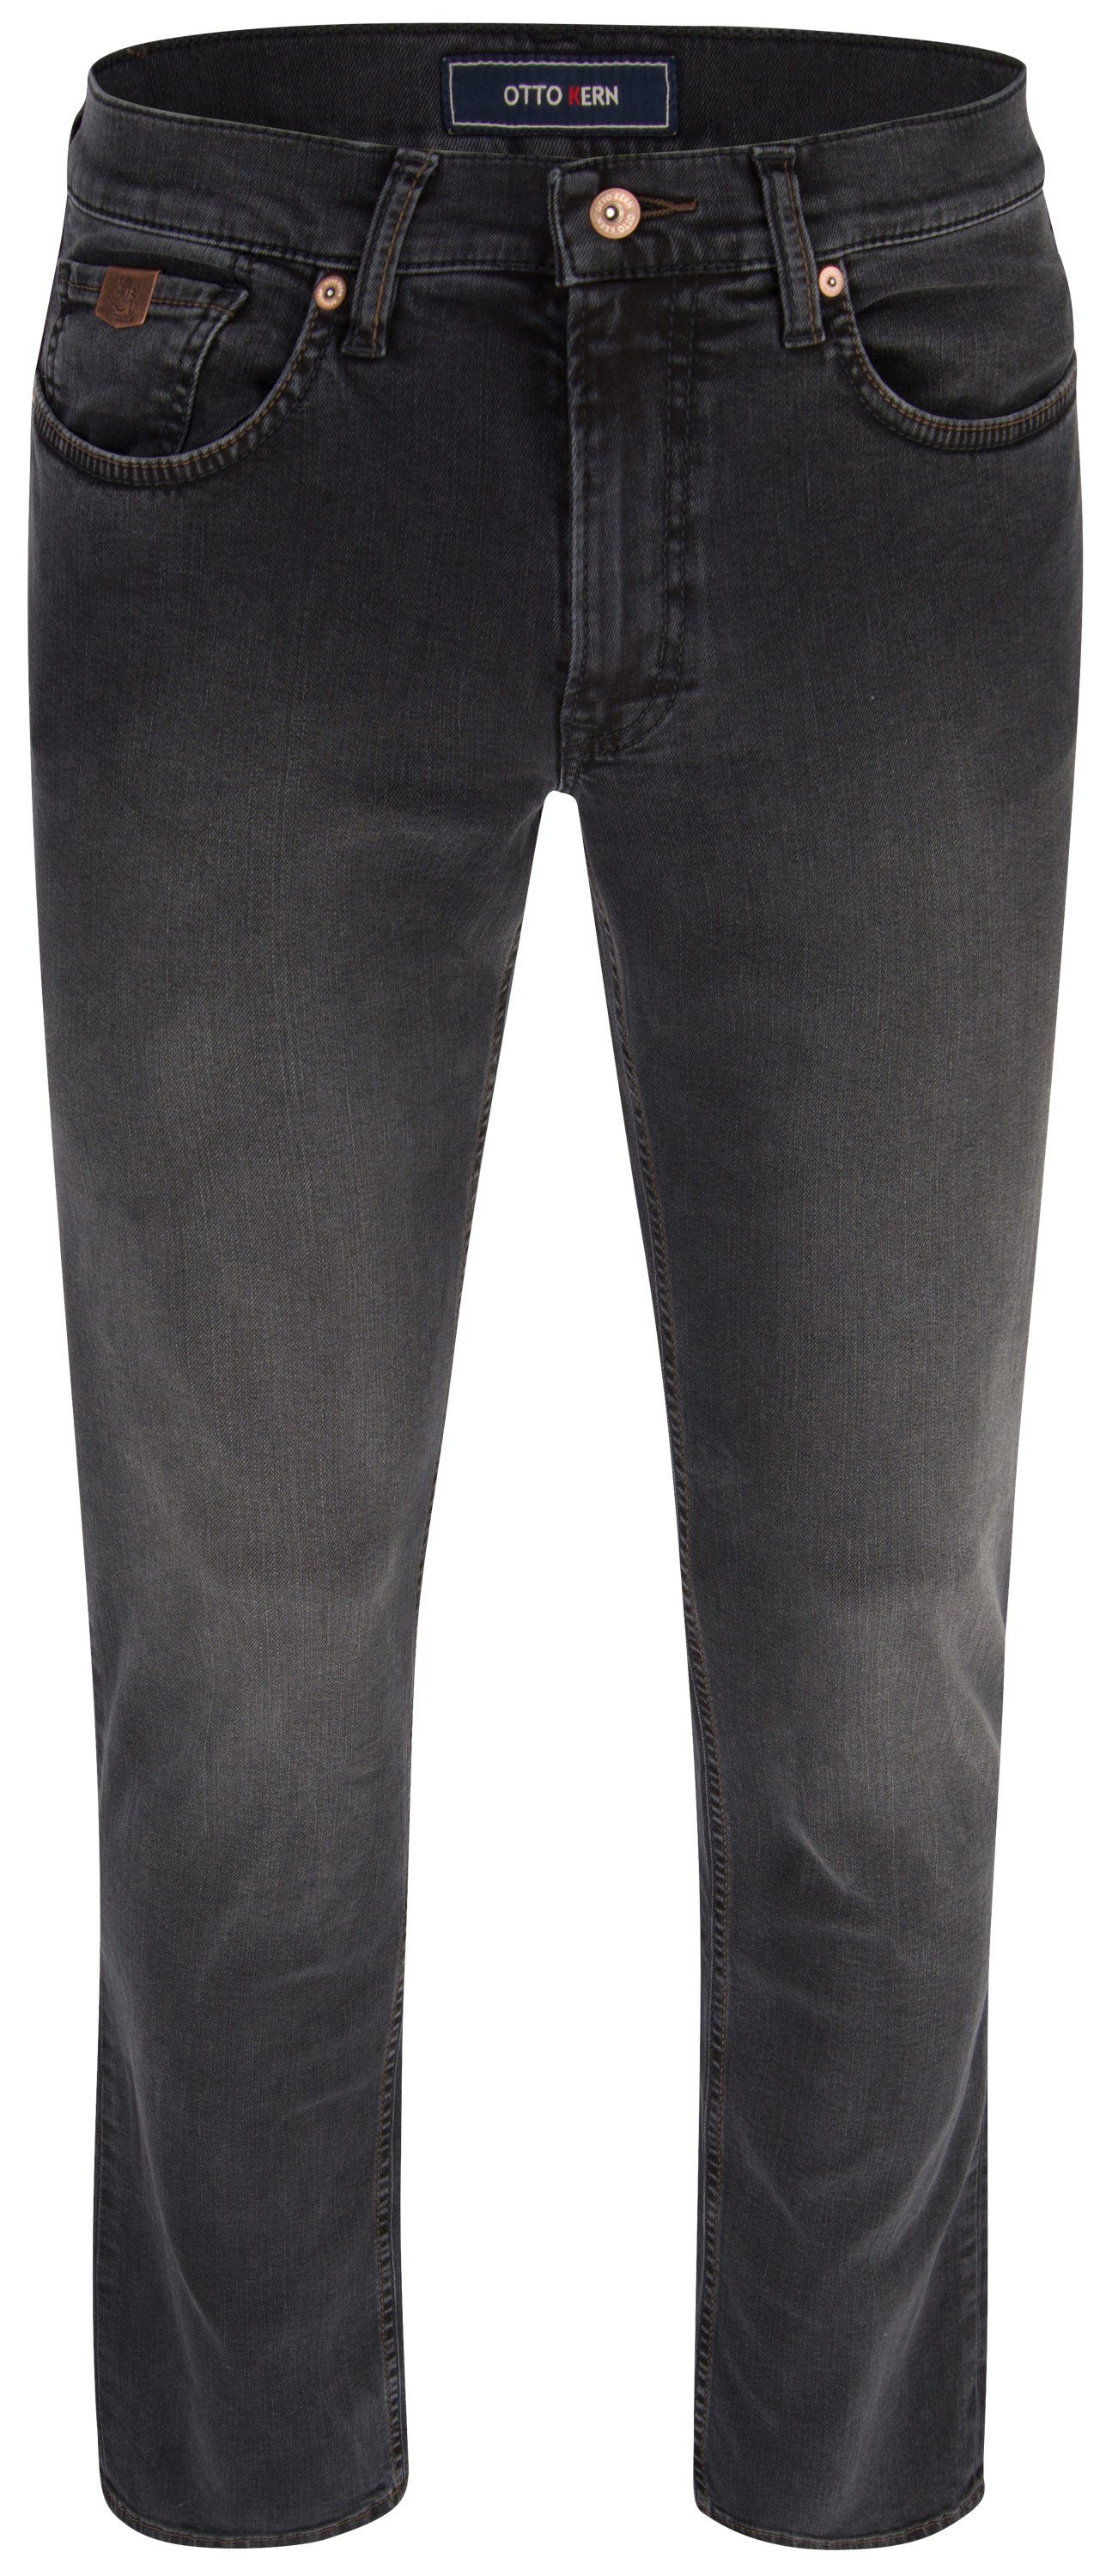  Kern 5-Pocket-Jeans OTTO KERN JOHN black grey used 67149 6962.9802